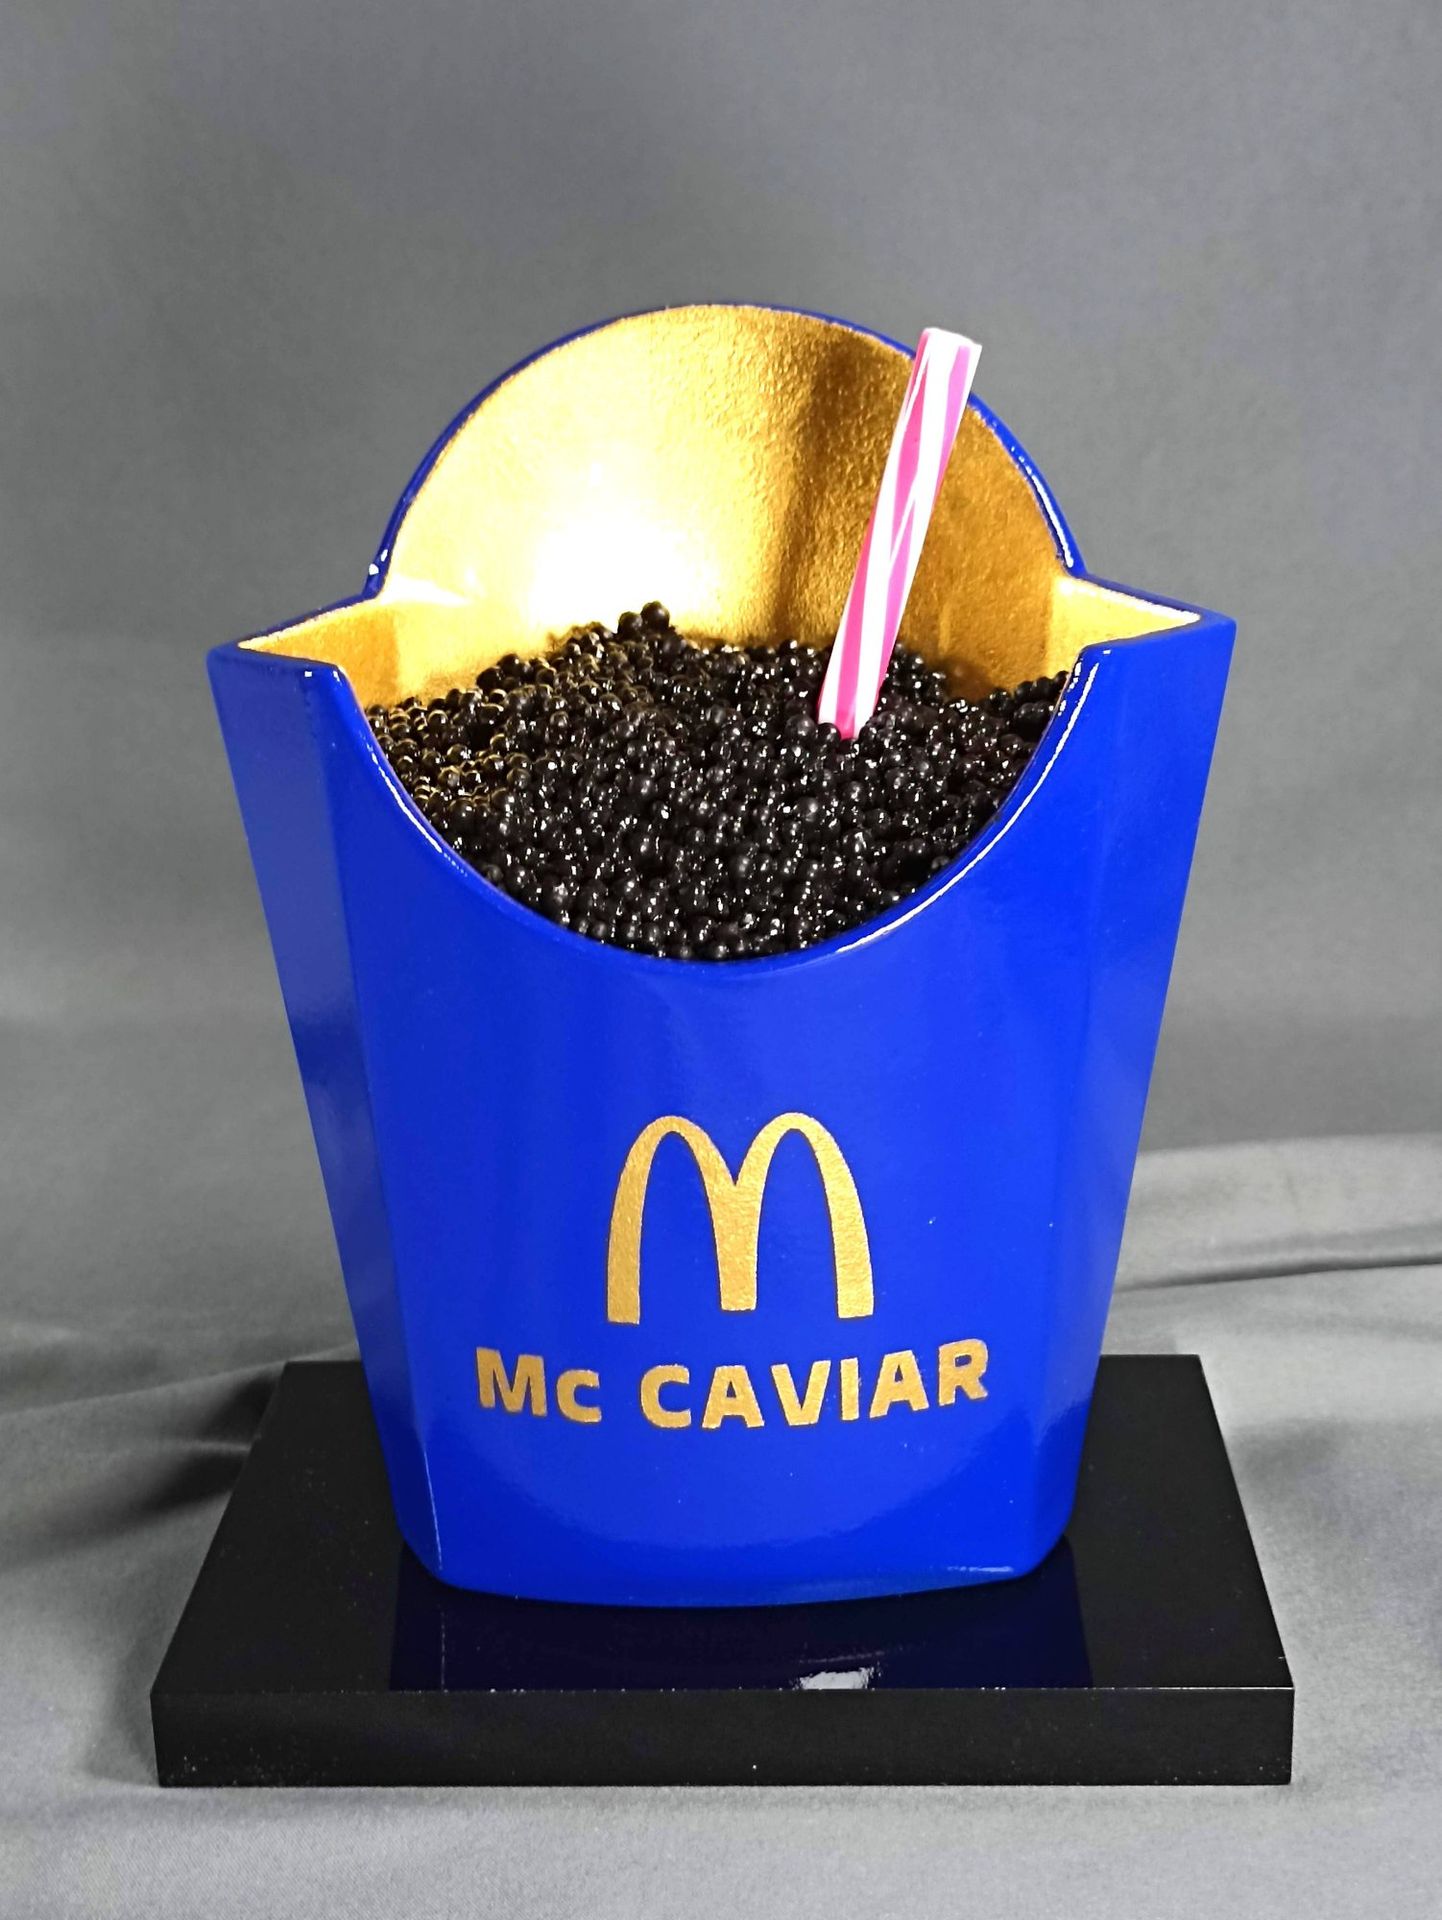 XTC MC CAVIAR 19CM GLOSSY BLUE – TURQUOISE STRAW 2/8
Grand cornet de Mc Caviar b&hellip;